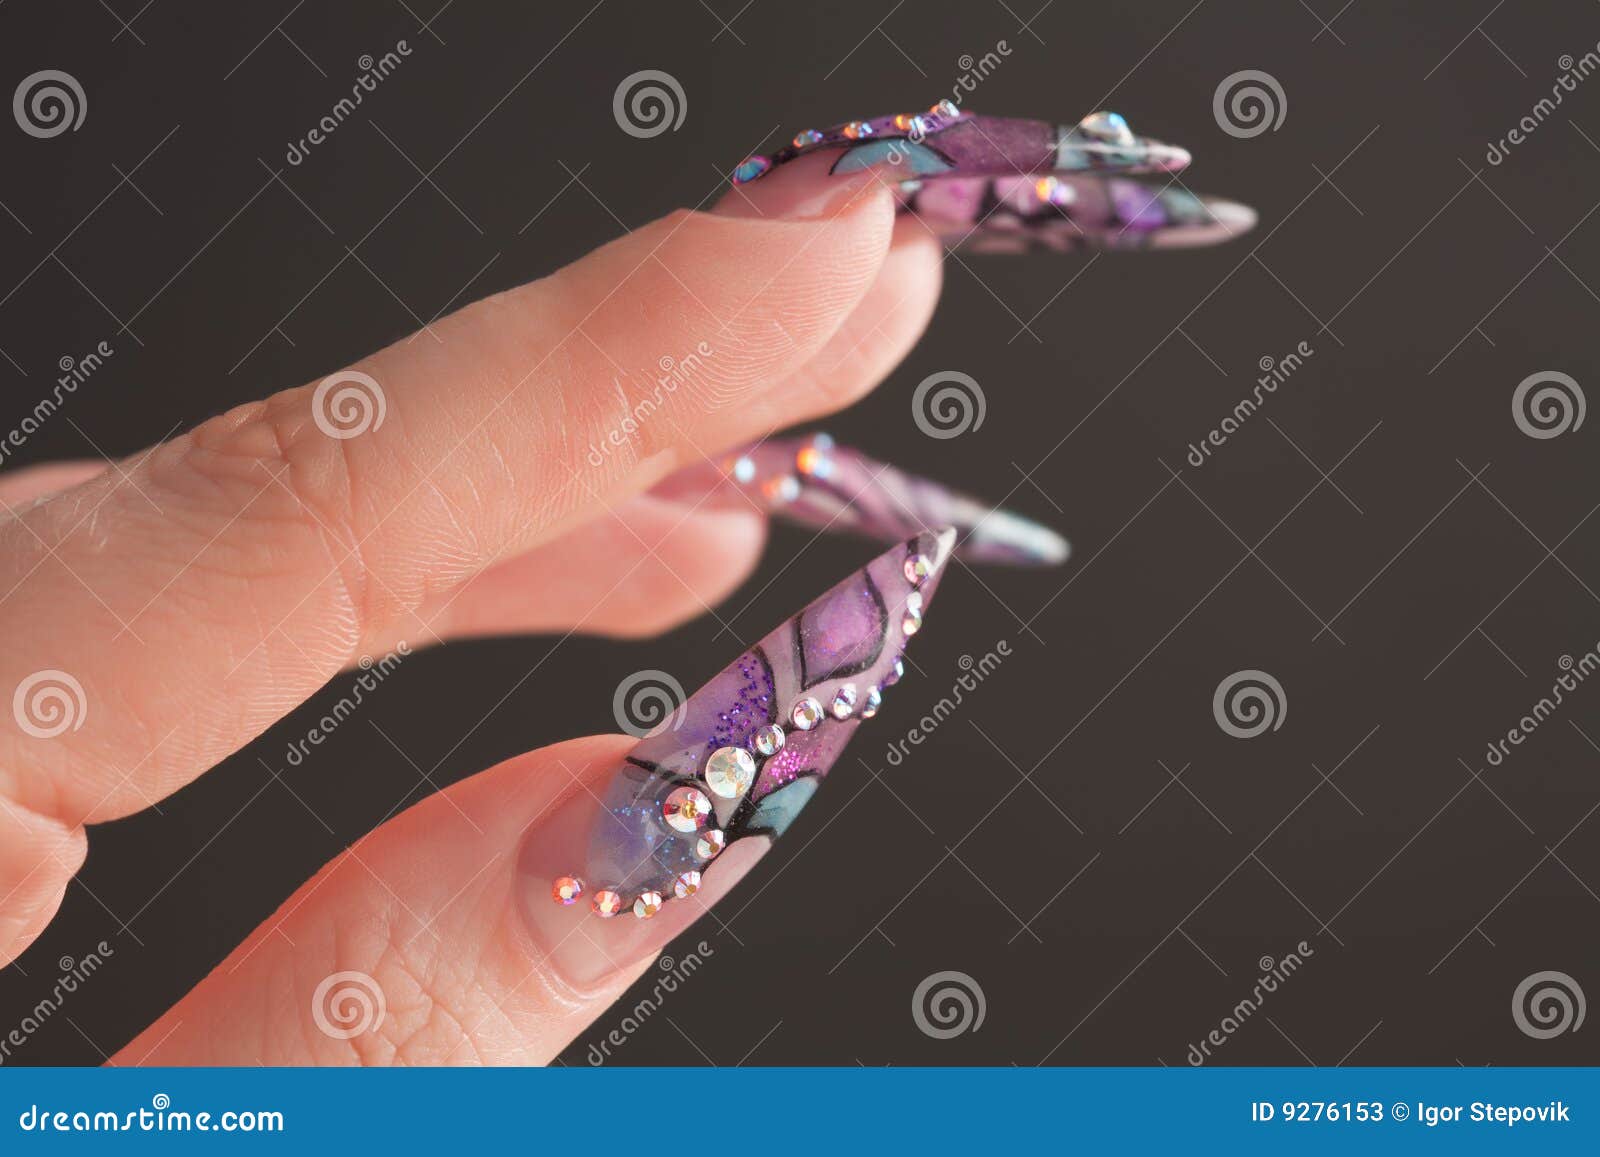 human fingers with long fingernail